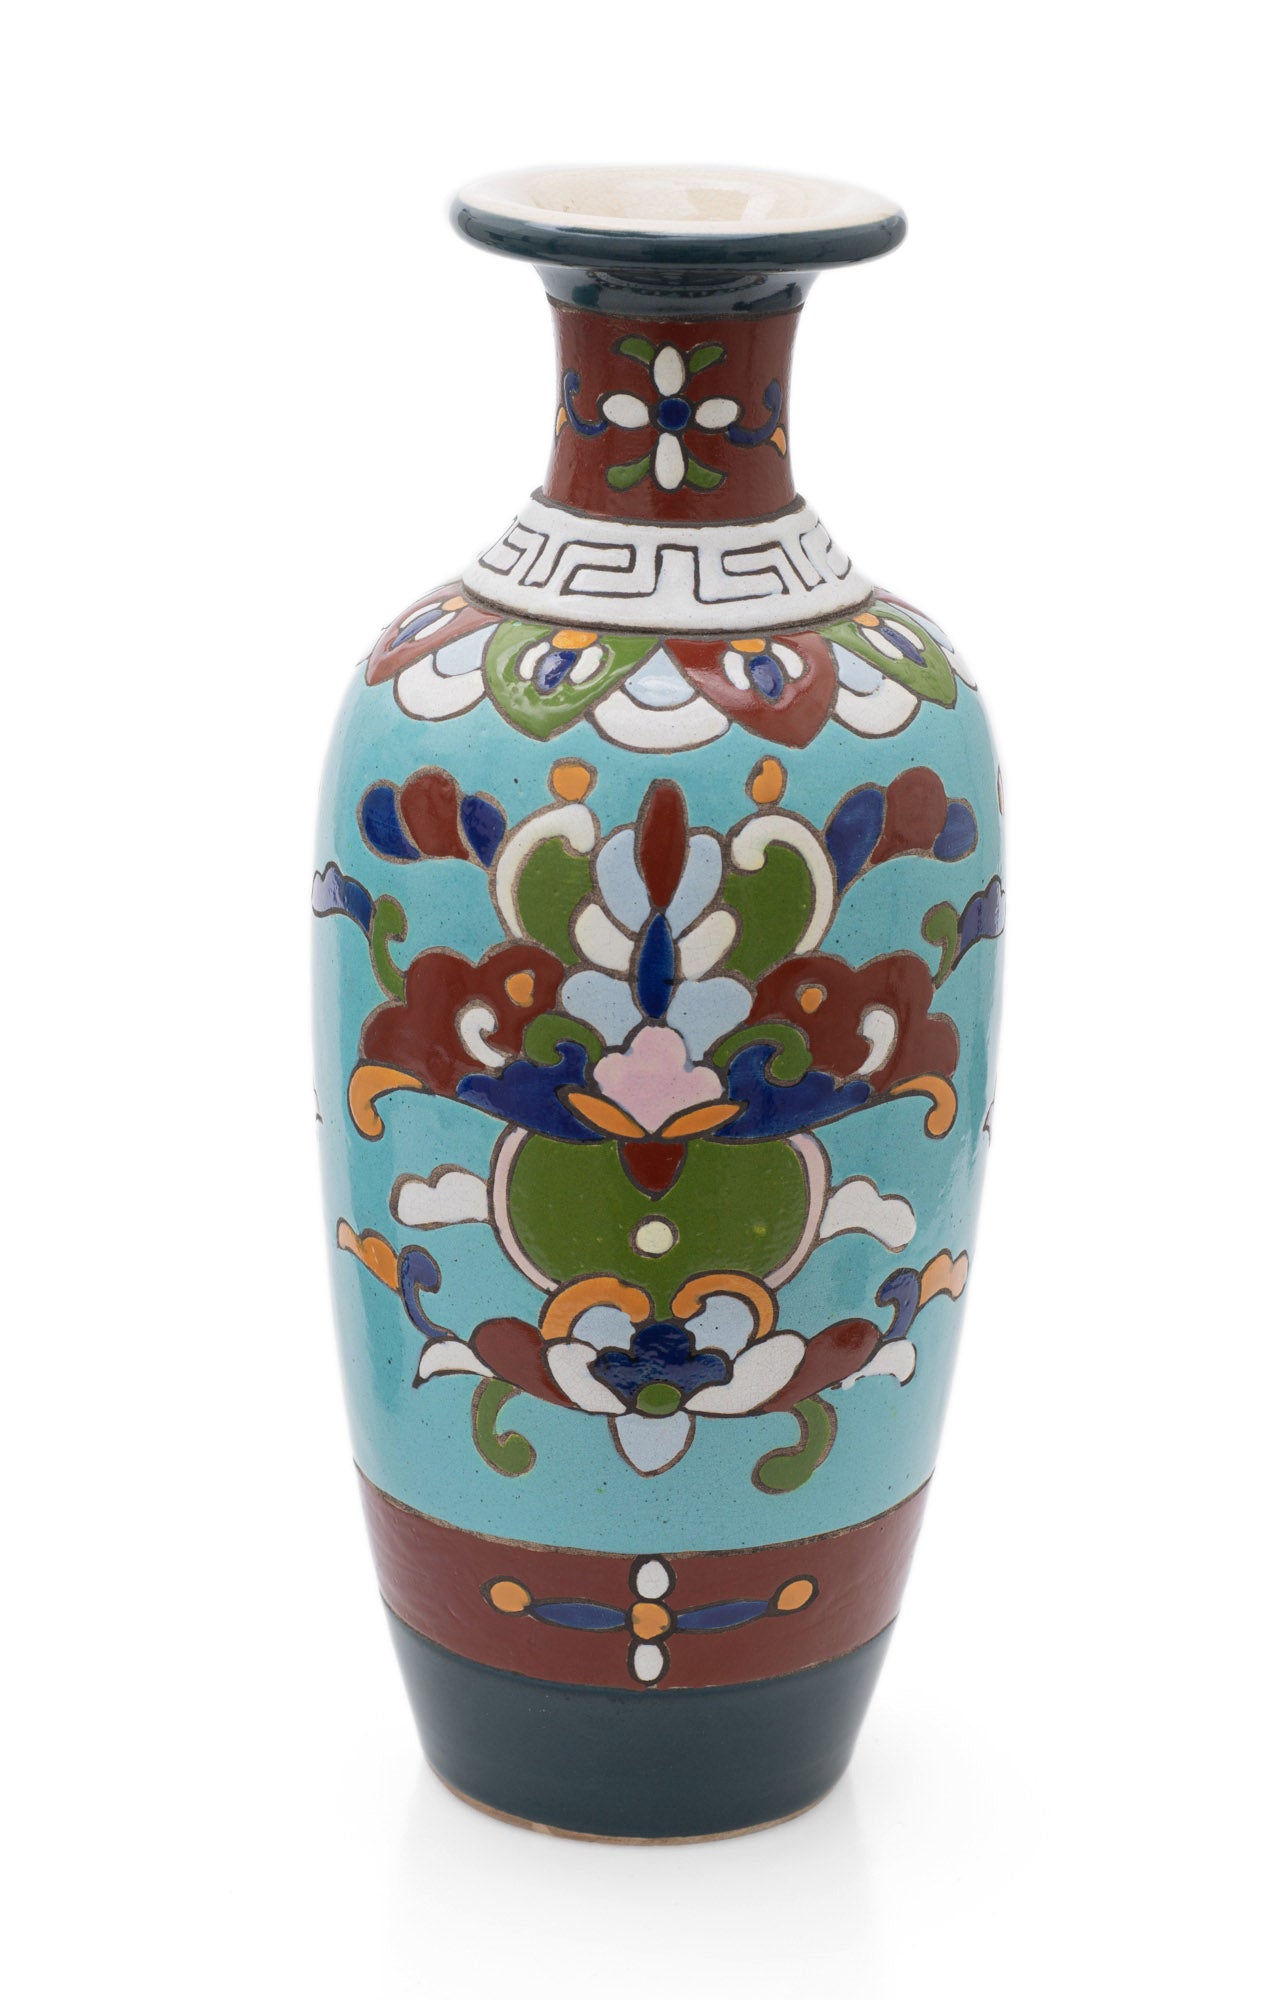 Rare Pair Antique Japanese Satsuma Pottery Cloisonne Design Vases, Meiji c1890 (Code 2527)